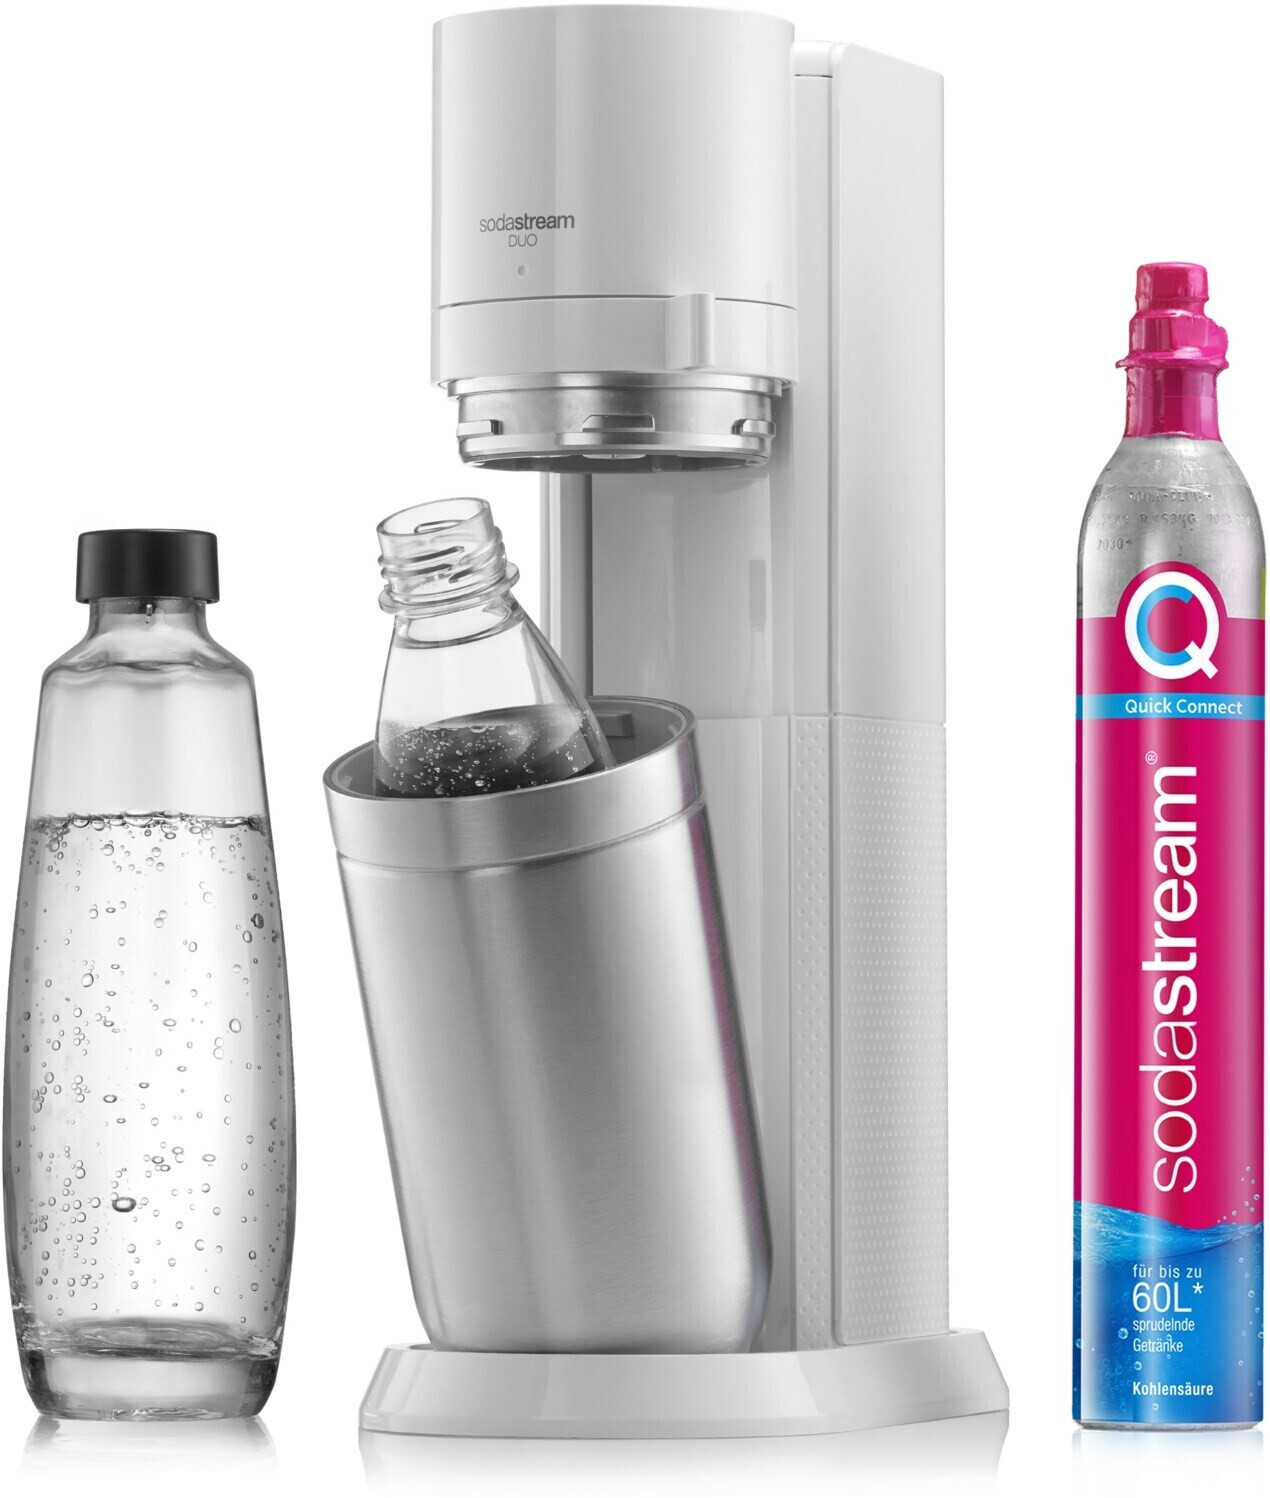 Sodastream Sprudelgerät Duo white kaufen bei RHYNER Haushalt Multimedia